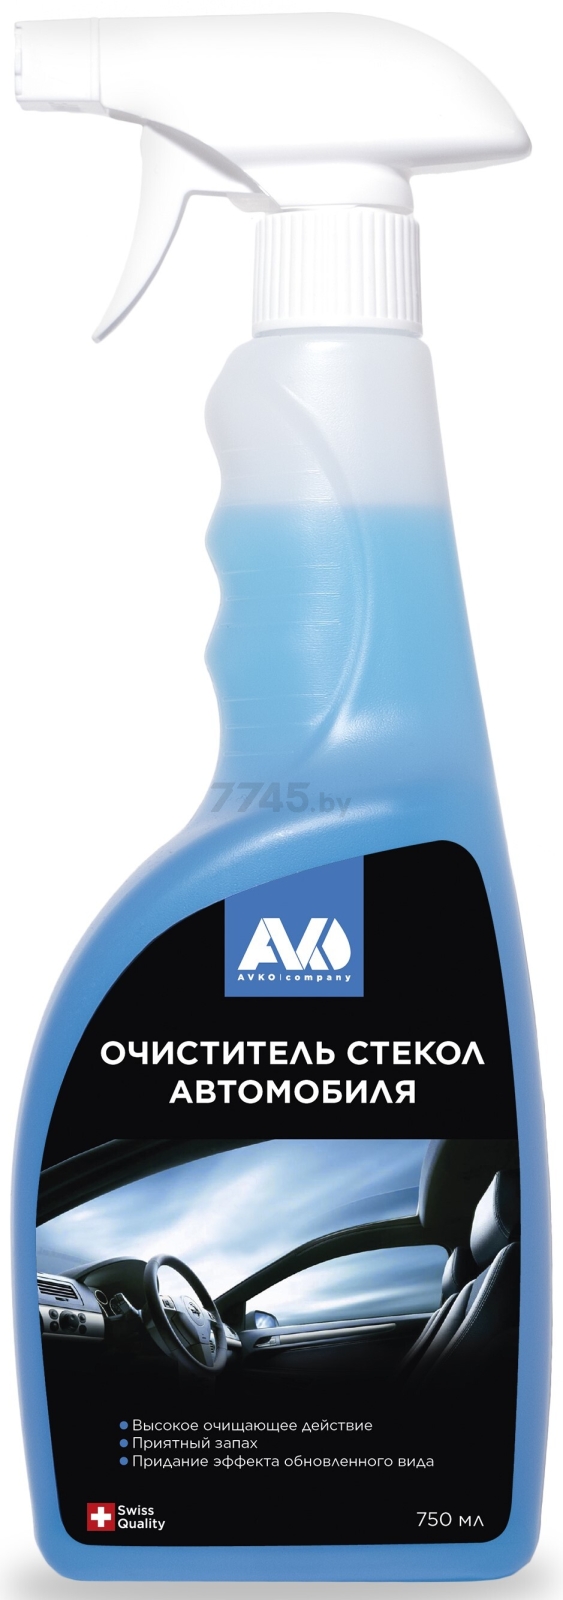 Очиститель стёкол автомобиля AVKO 0,75 л